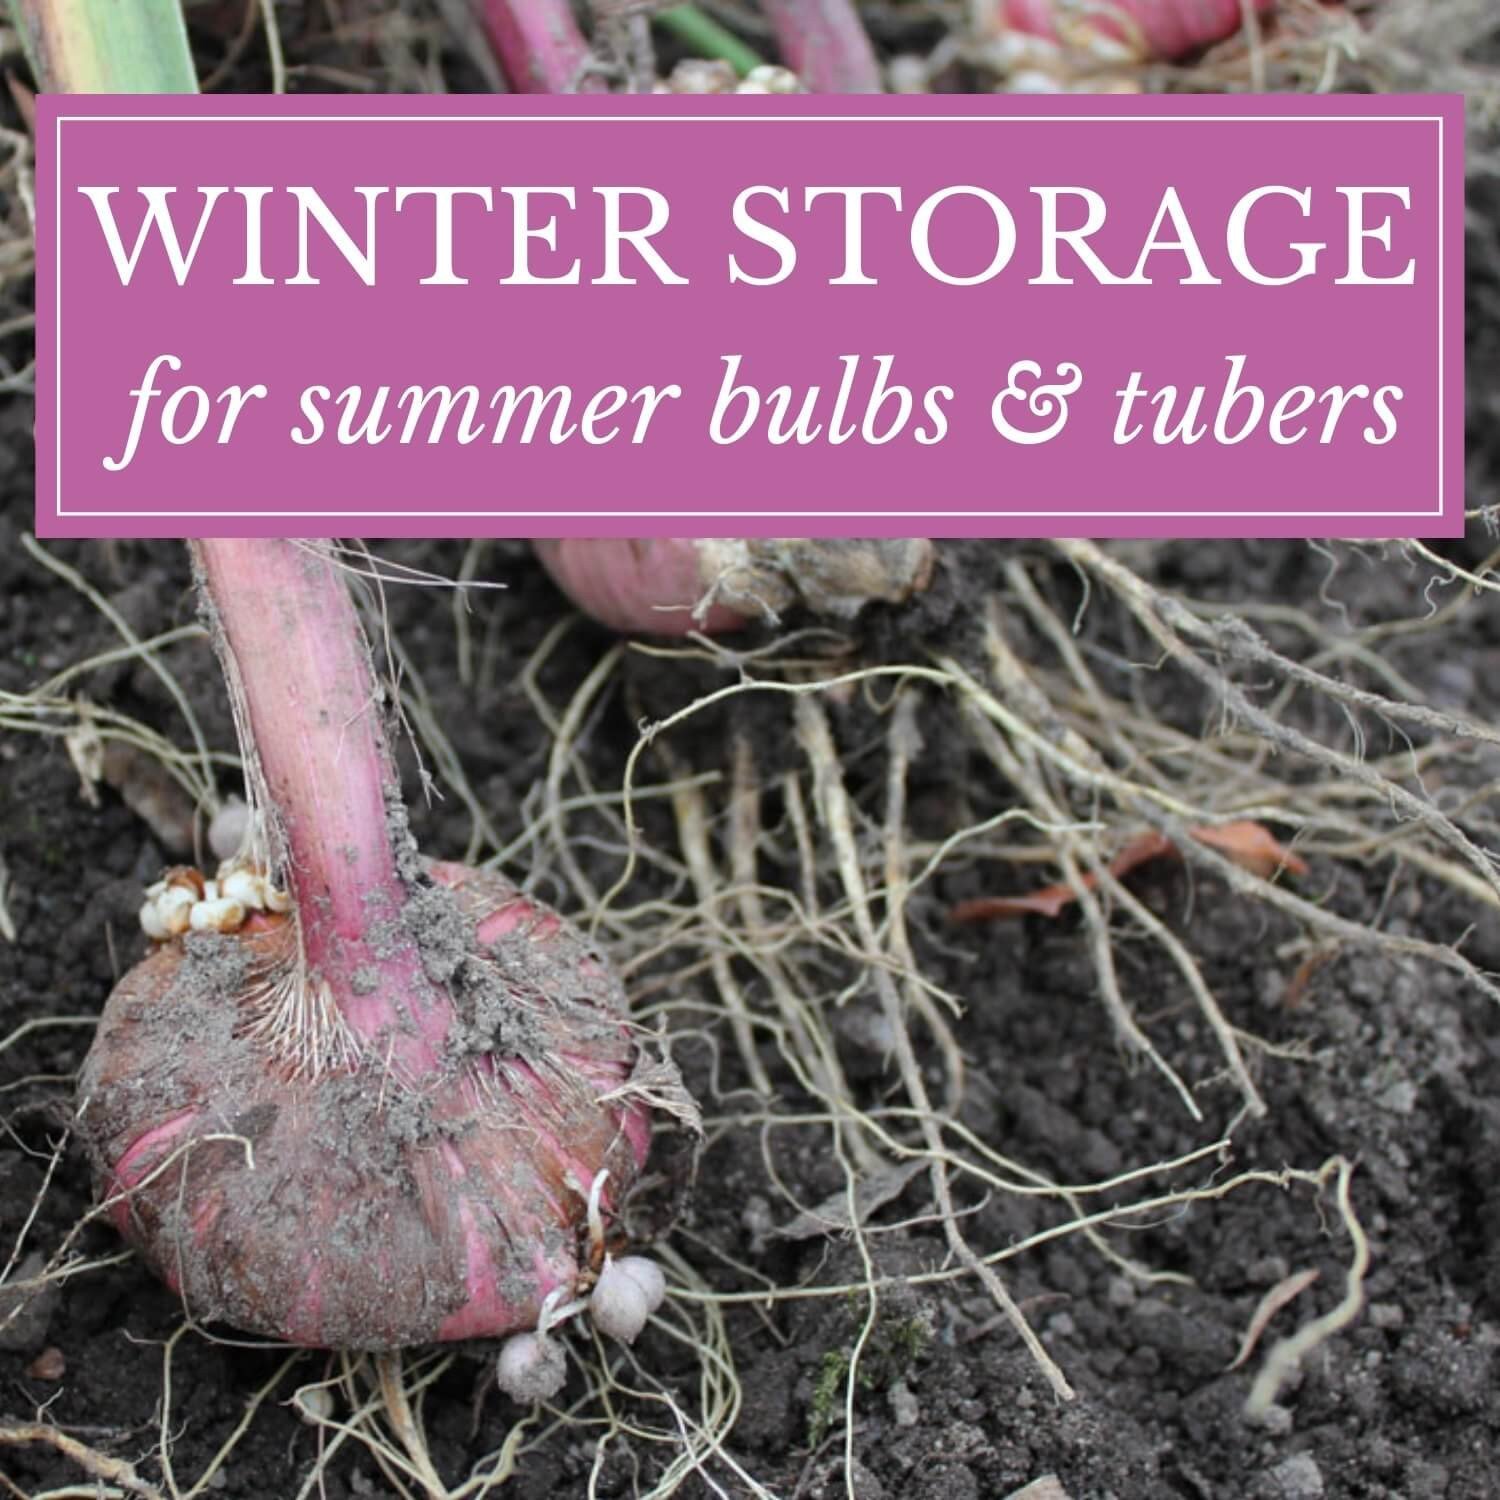 https://dropinblog.net/34250657/files/featured/Winter-Storage-for-Summer-Bulbs-Tubers.jpg